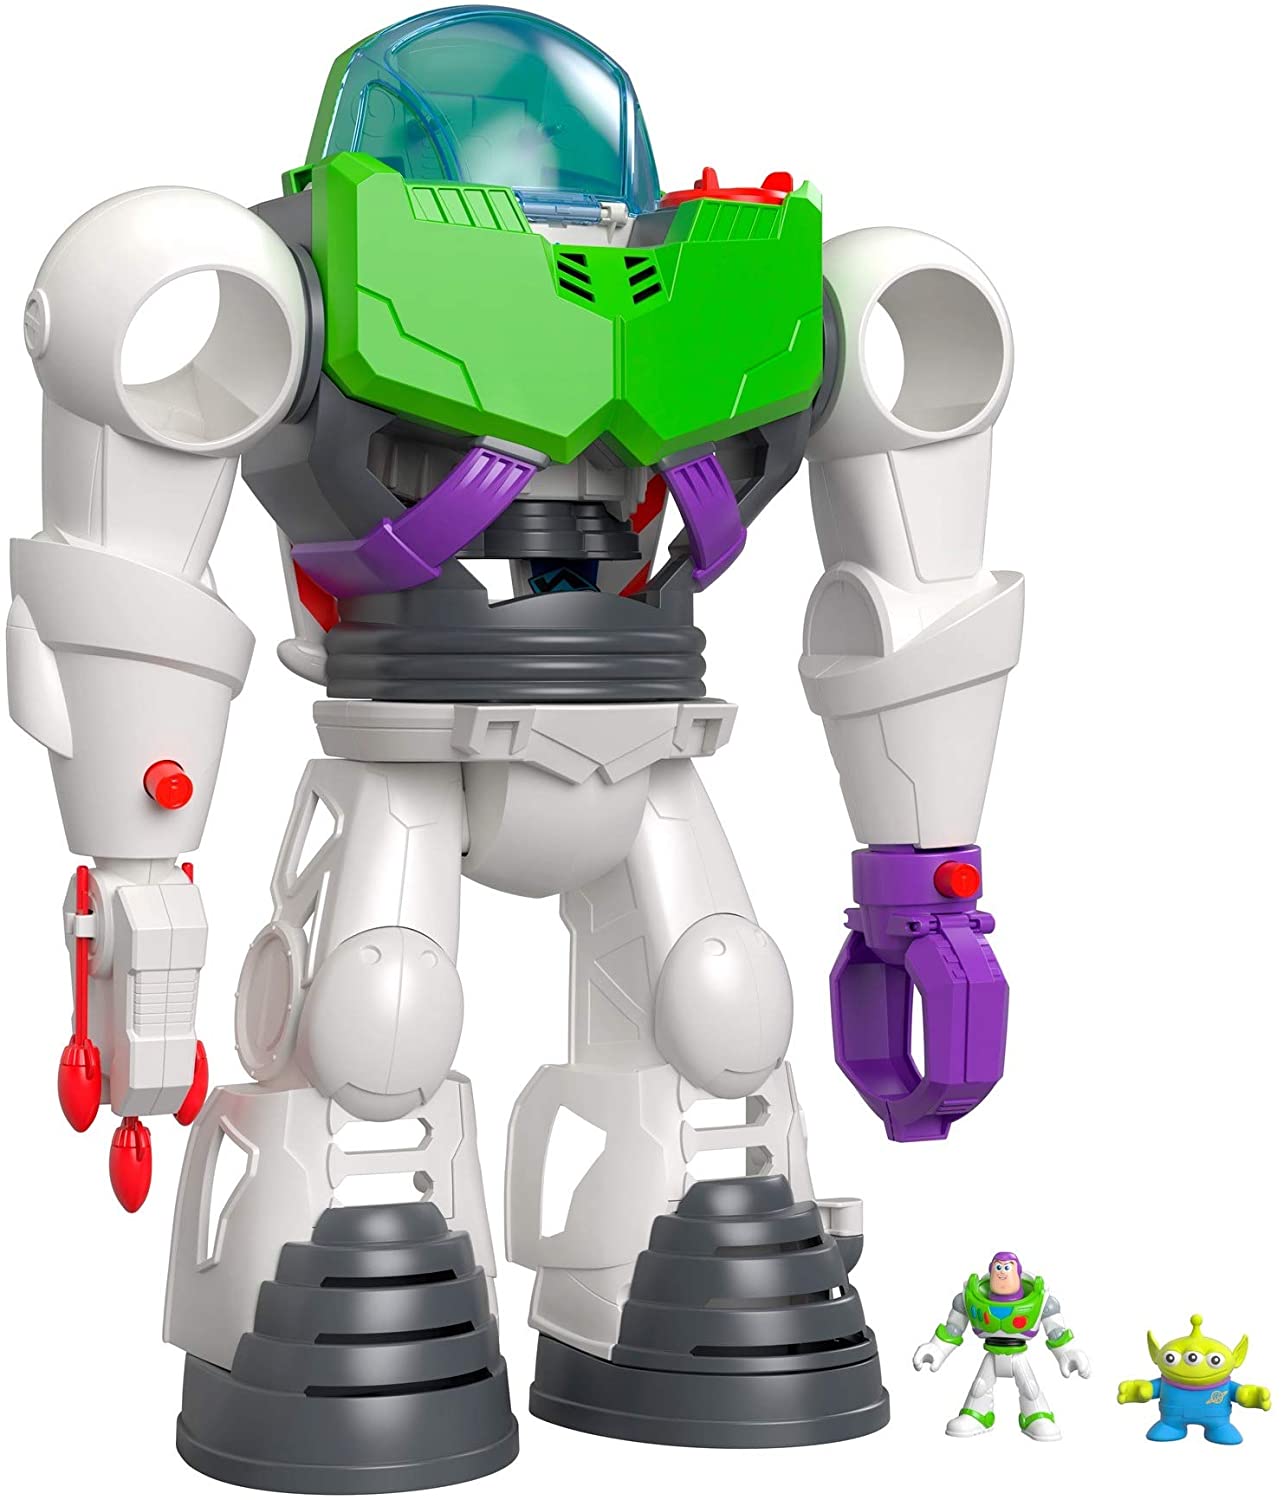 20" Fisher-Price Imaginext Disney Pixar Toy Story Buzz Lightyear Robot $39.99 + Free Shipping